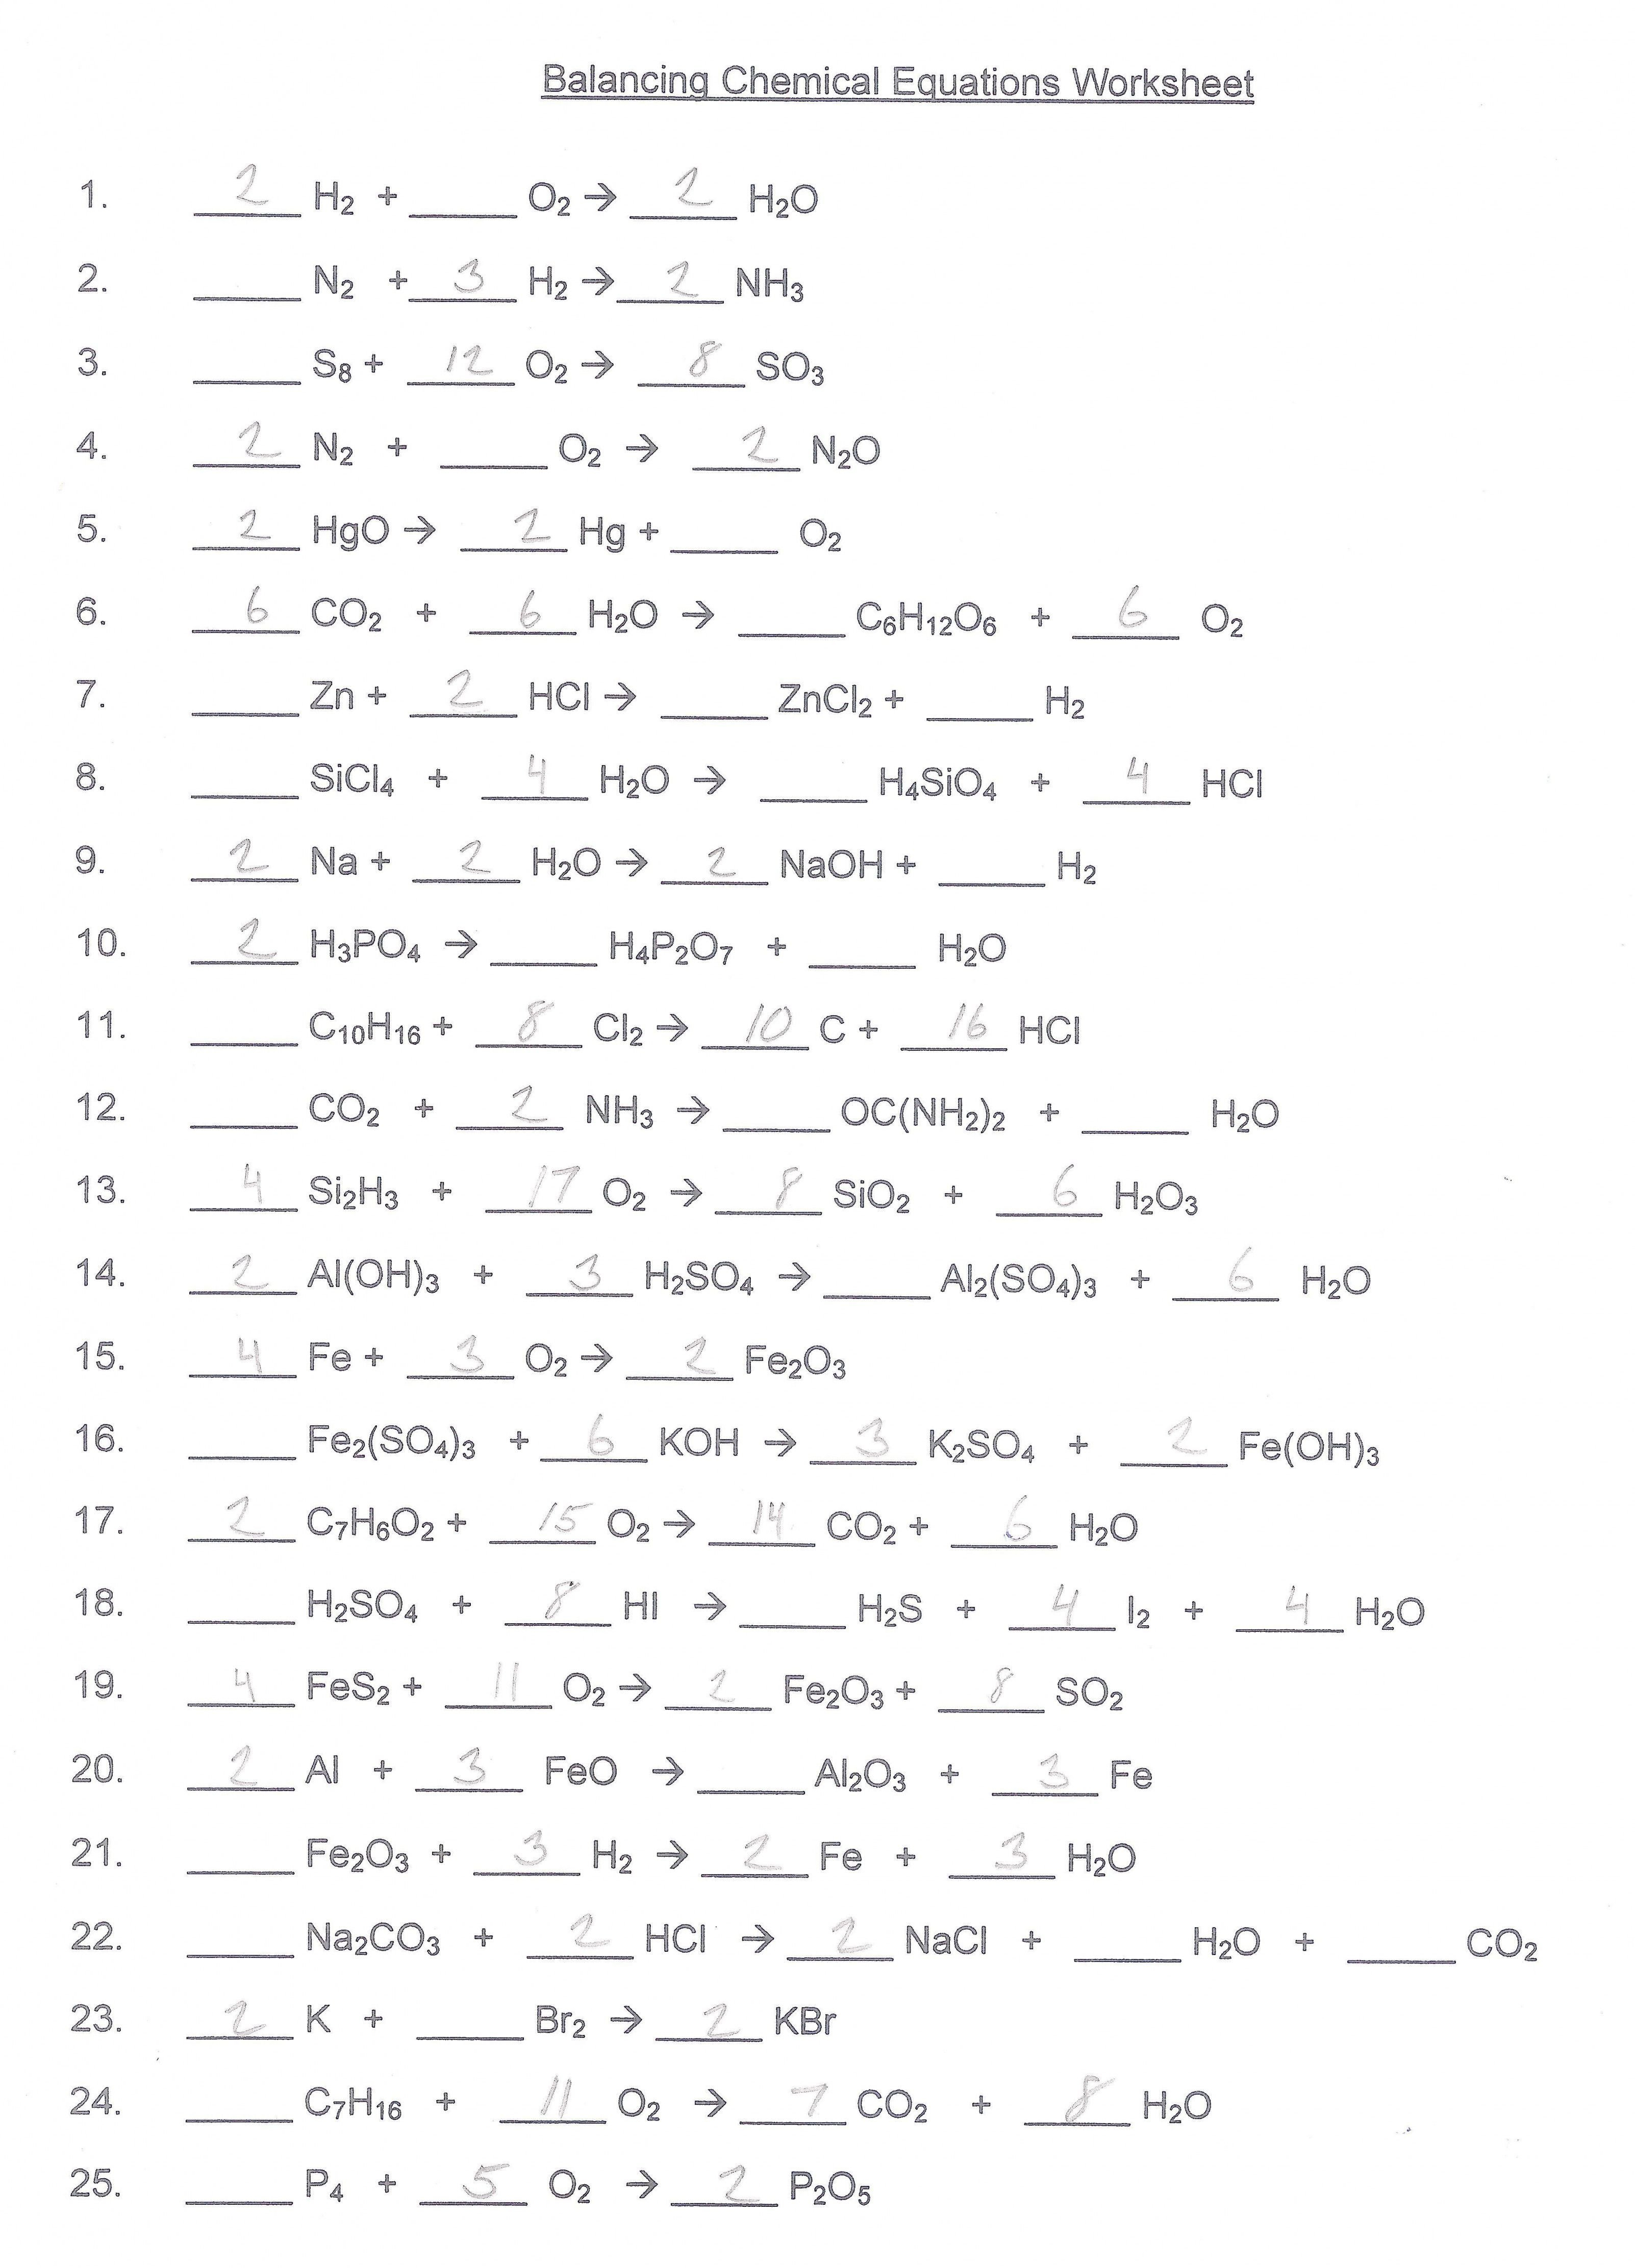 Balancing Chemical Equations Worksheet Answers 1 25  Lobo Black Within Balancing Chemical Equations Worksheet Answer Key 1 25